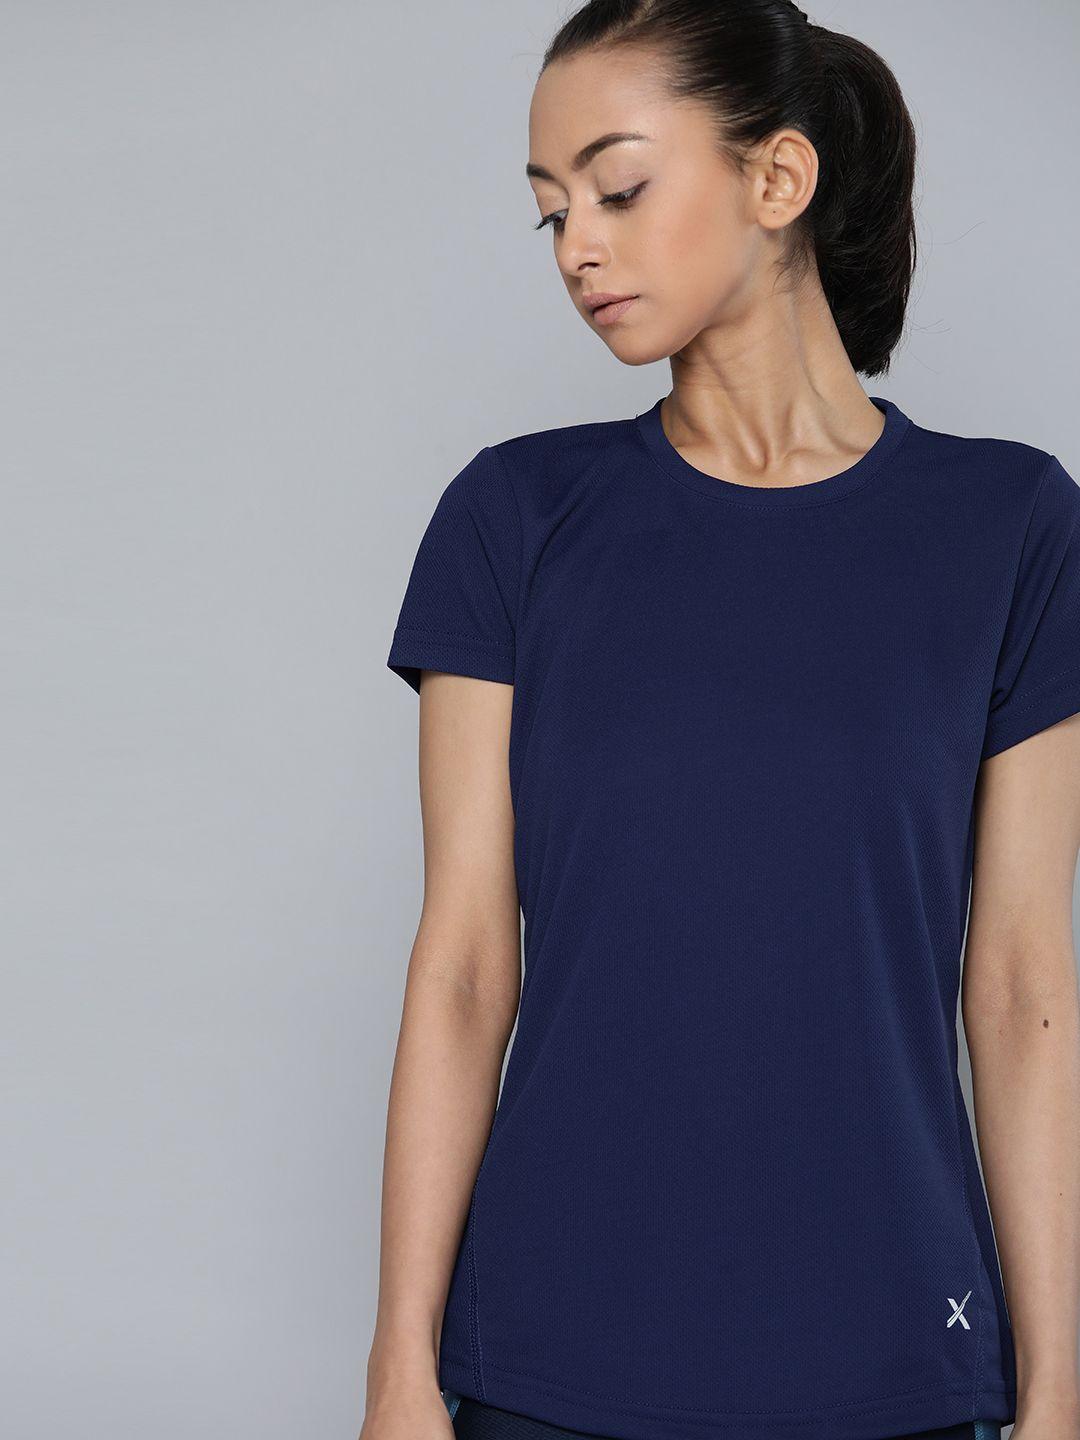 hrx-by-hrithik-roshan-women-navy-blue-rapid-dry-running-t-shirt